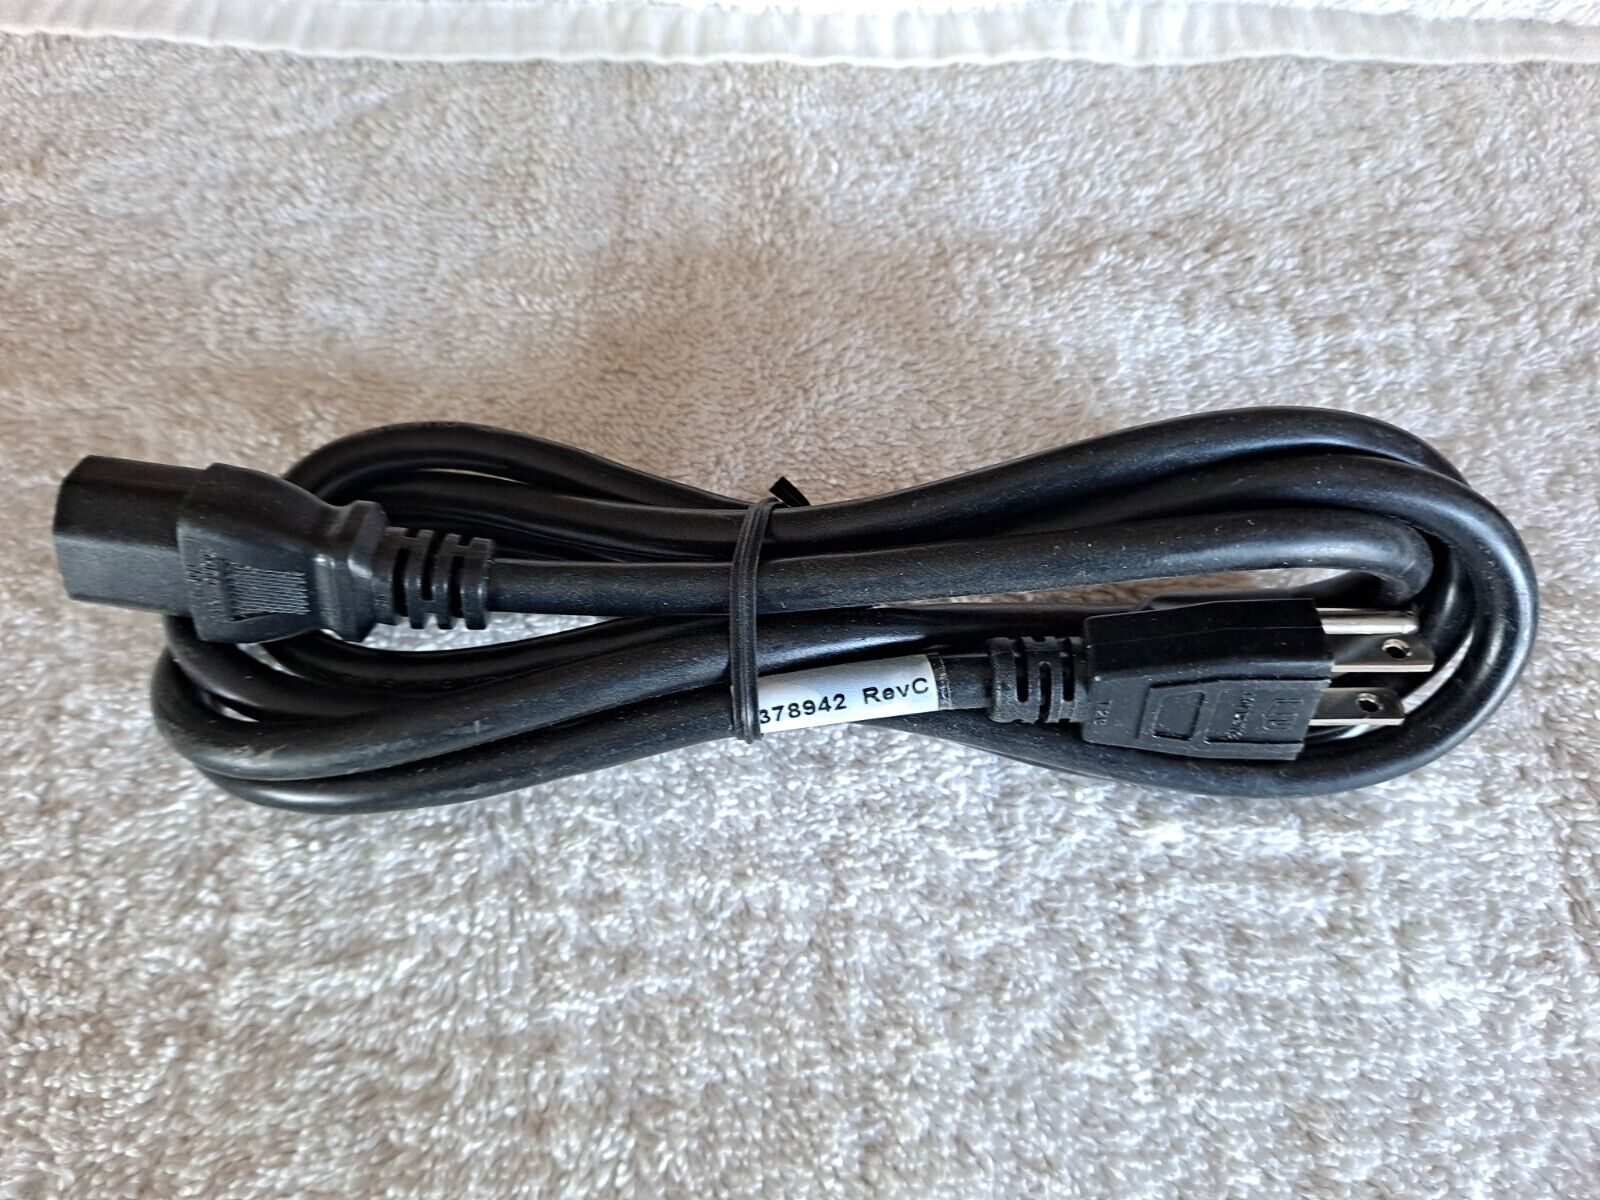 Genuine OEM Lian Dung E121791 AC Power Cord for Computers, 6 Feet, Black